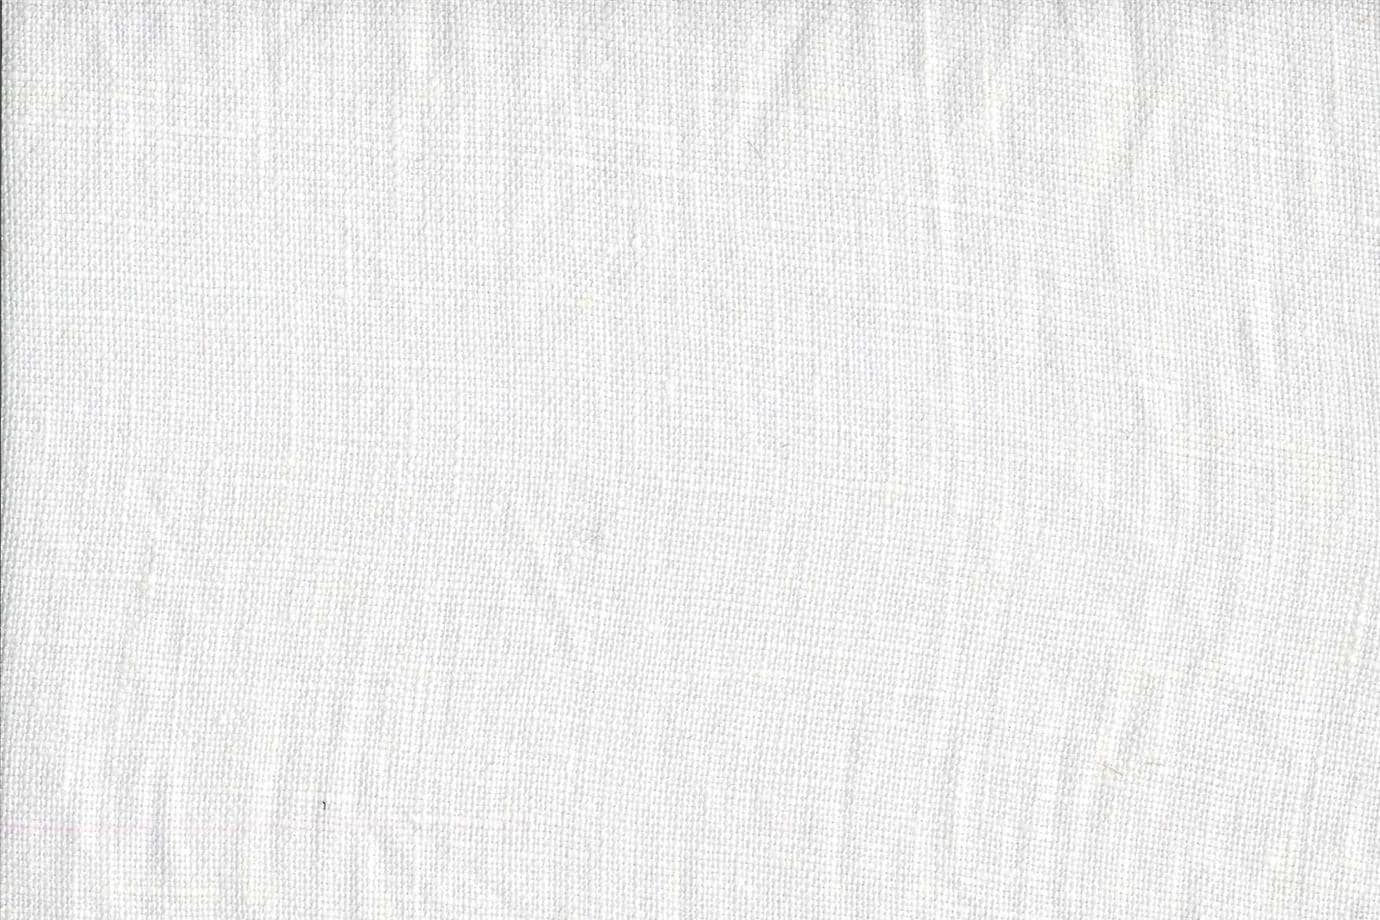 JB008 WONDERLAND 001 Bianco cedro home decoration fabric